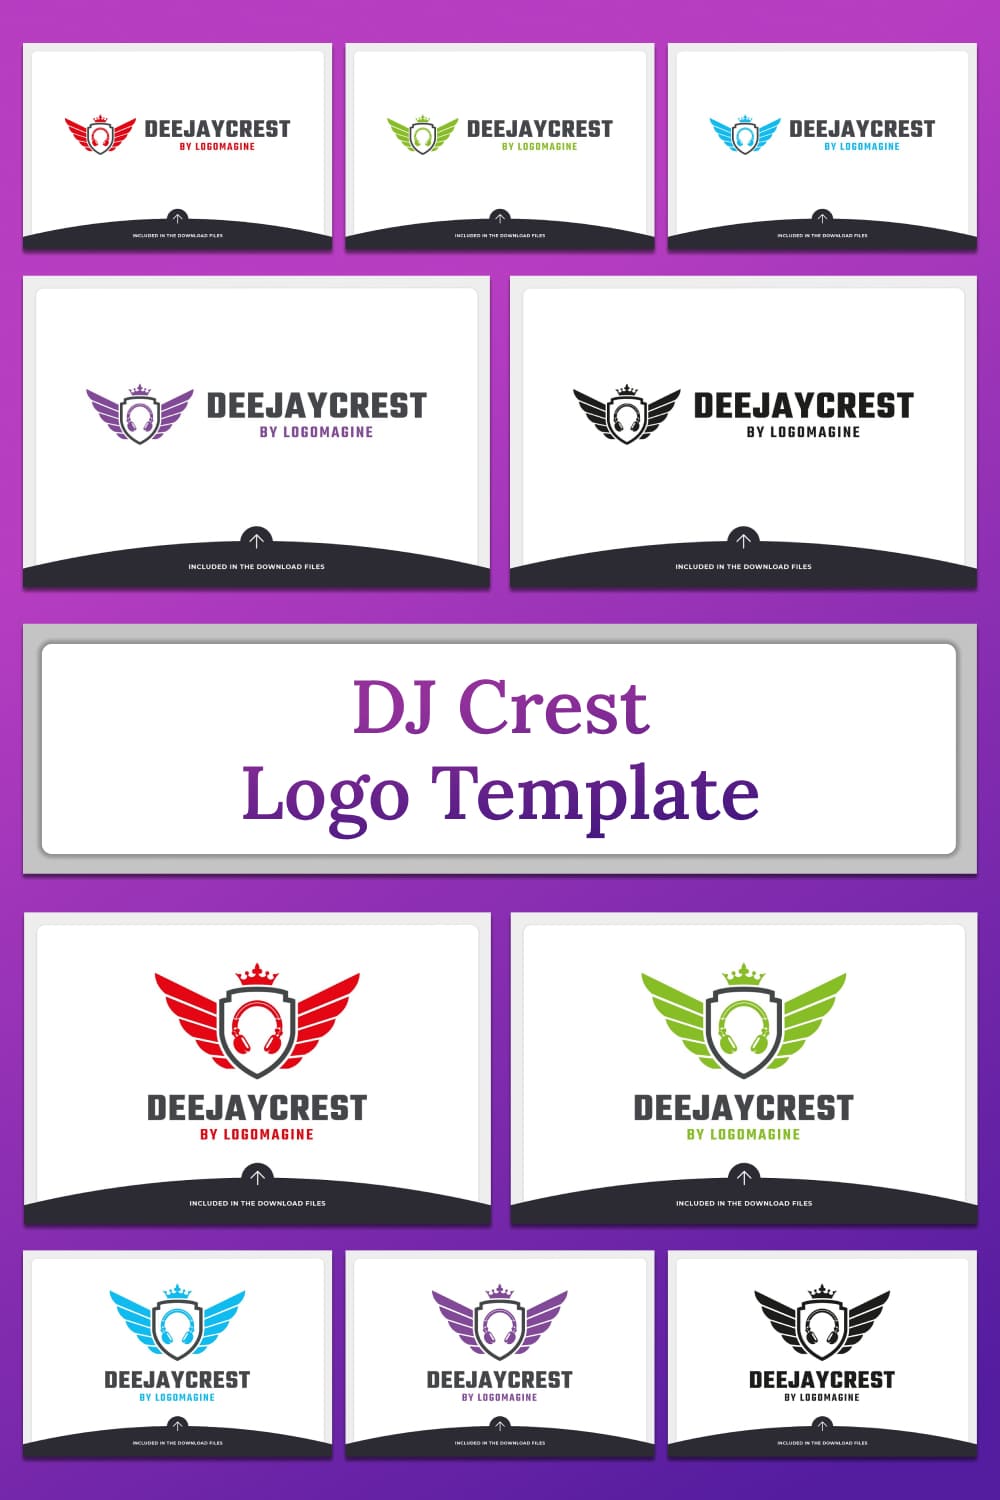 dj crest logo bright design templates.